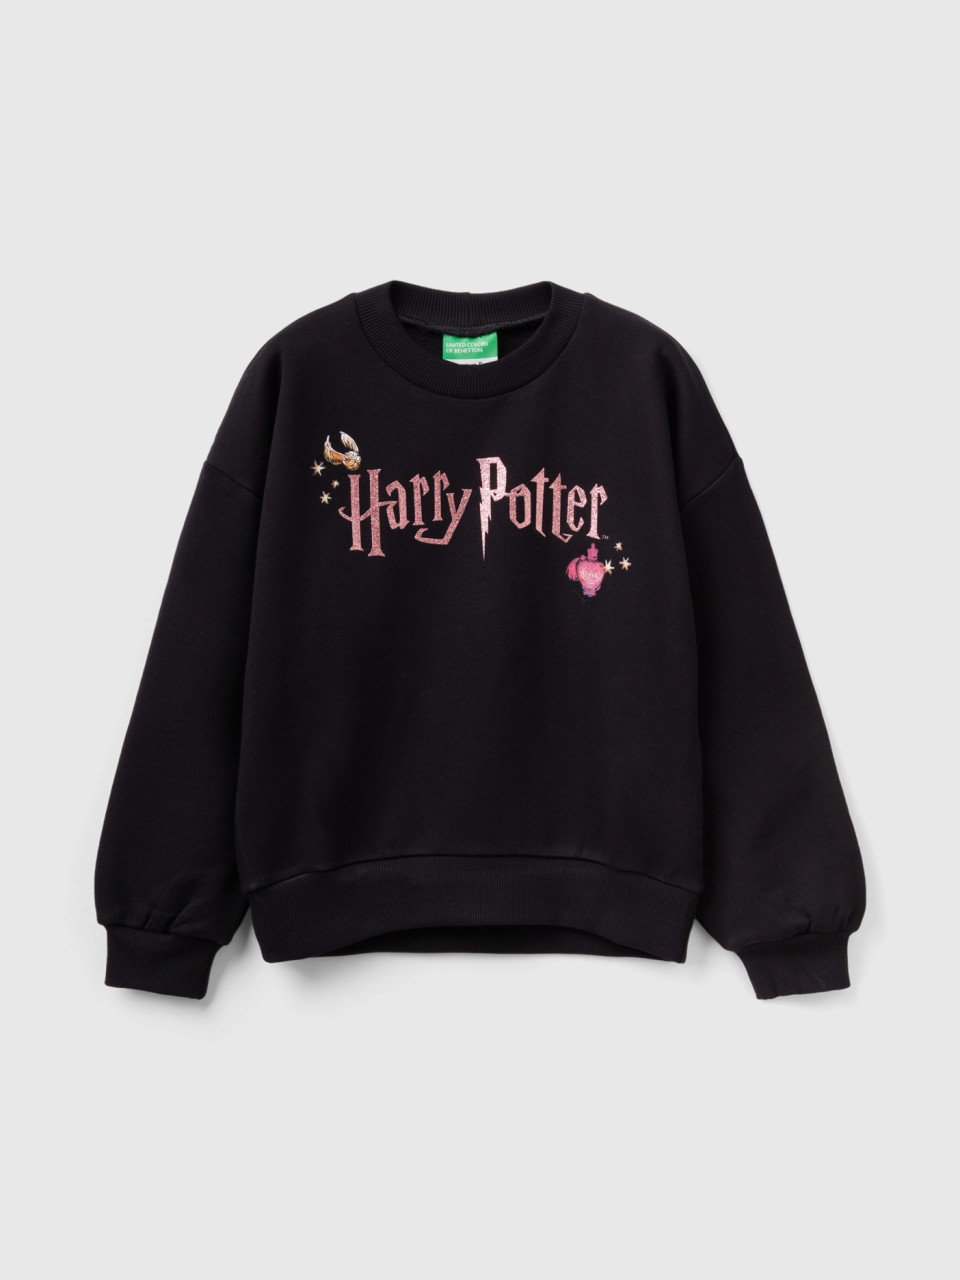 Benetton, Harry Potter Sweatshirt With Glitter, Black, Kids